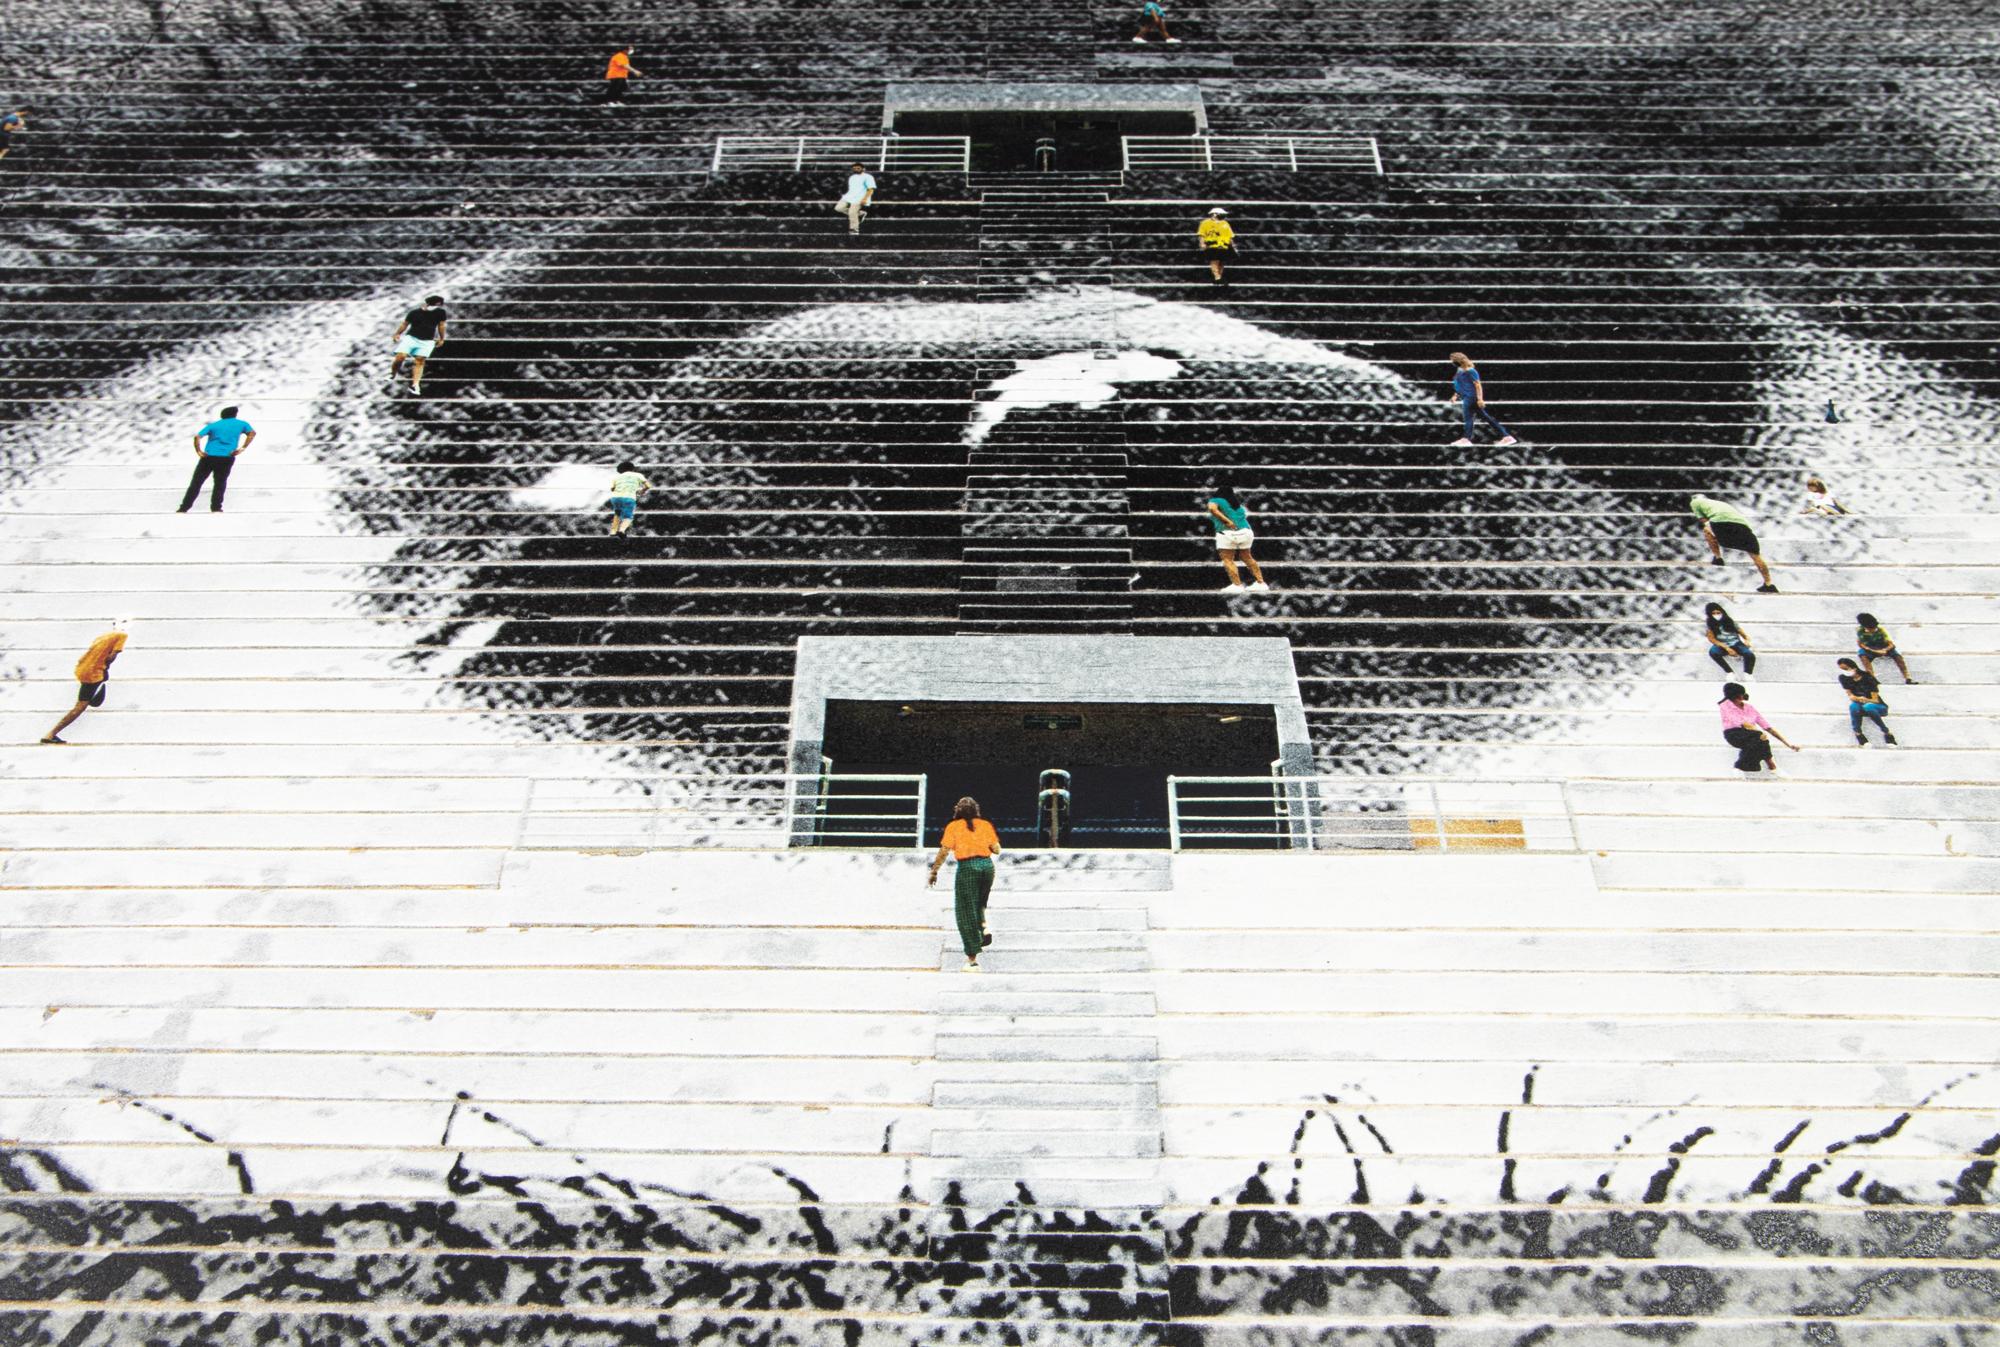 JR, Olho, Estadio de Pacaembu, Sao Paulo, 2020 - Lithograph, Signed Print - Gray Abstract Print by JR aka Jean René